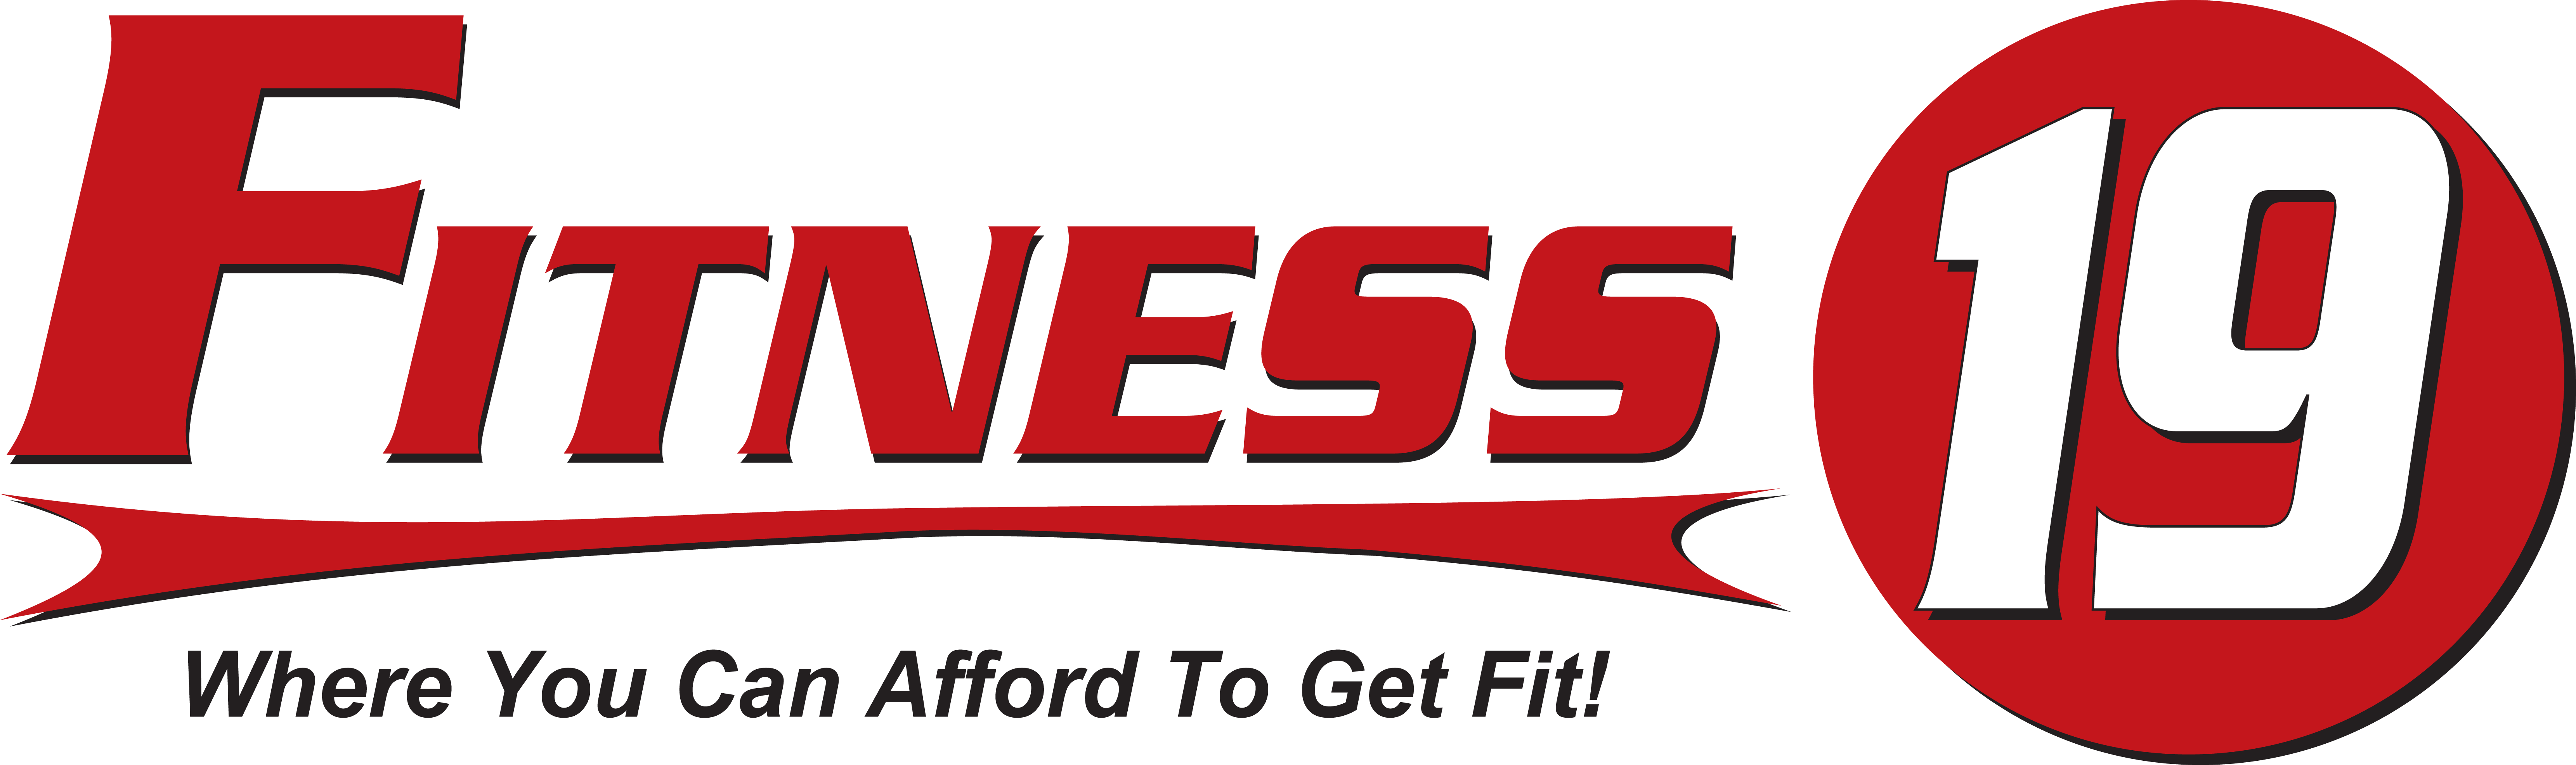 Fitness-19-Logo -best gyms in Toledo,0hio